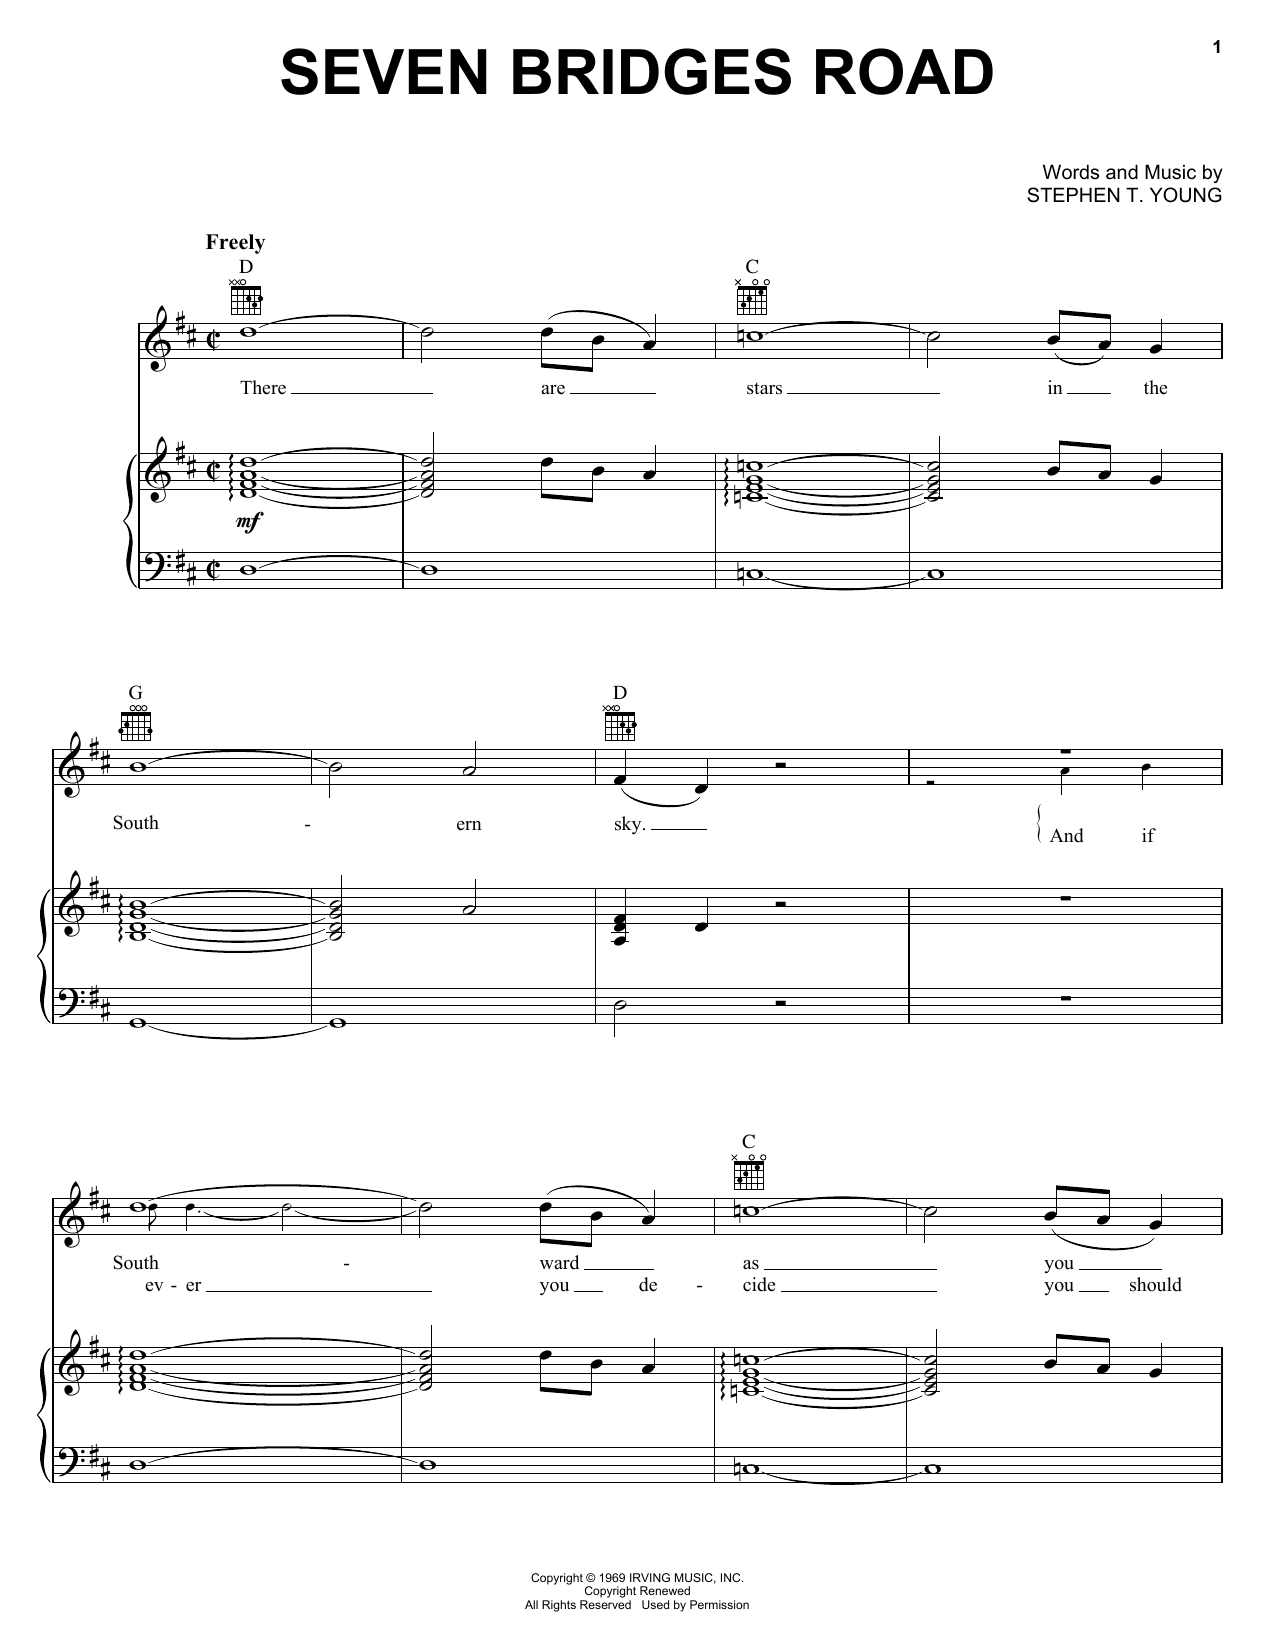 Eagles Seven Bridges Road Sheet Music Notes & Chords for Guitar Tab - Download or Print PDF